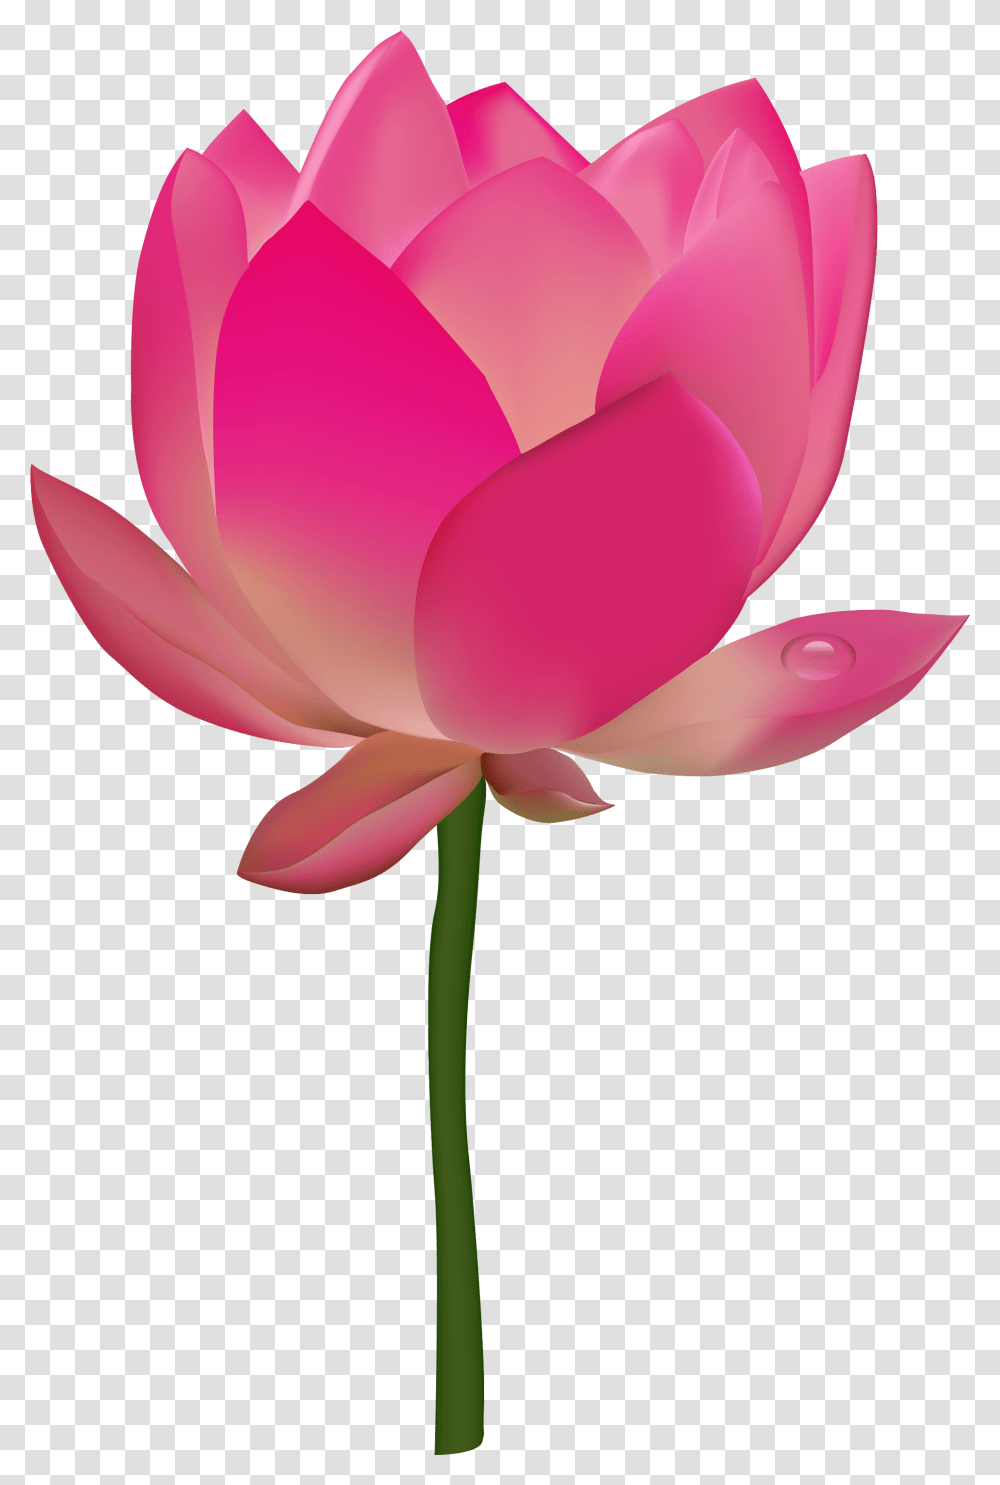 Flower Clipart Image Of Lotus, Plant, Blossom, Petal, Pond Lily Transparent Png